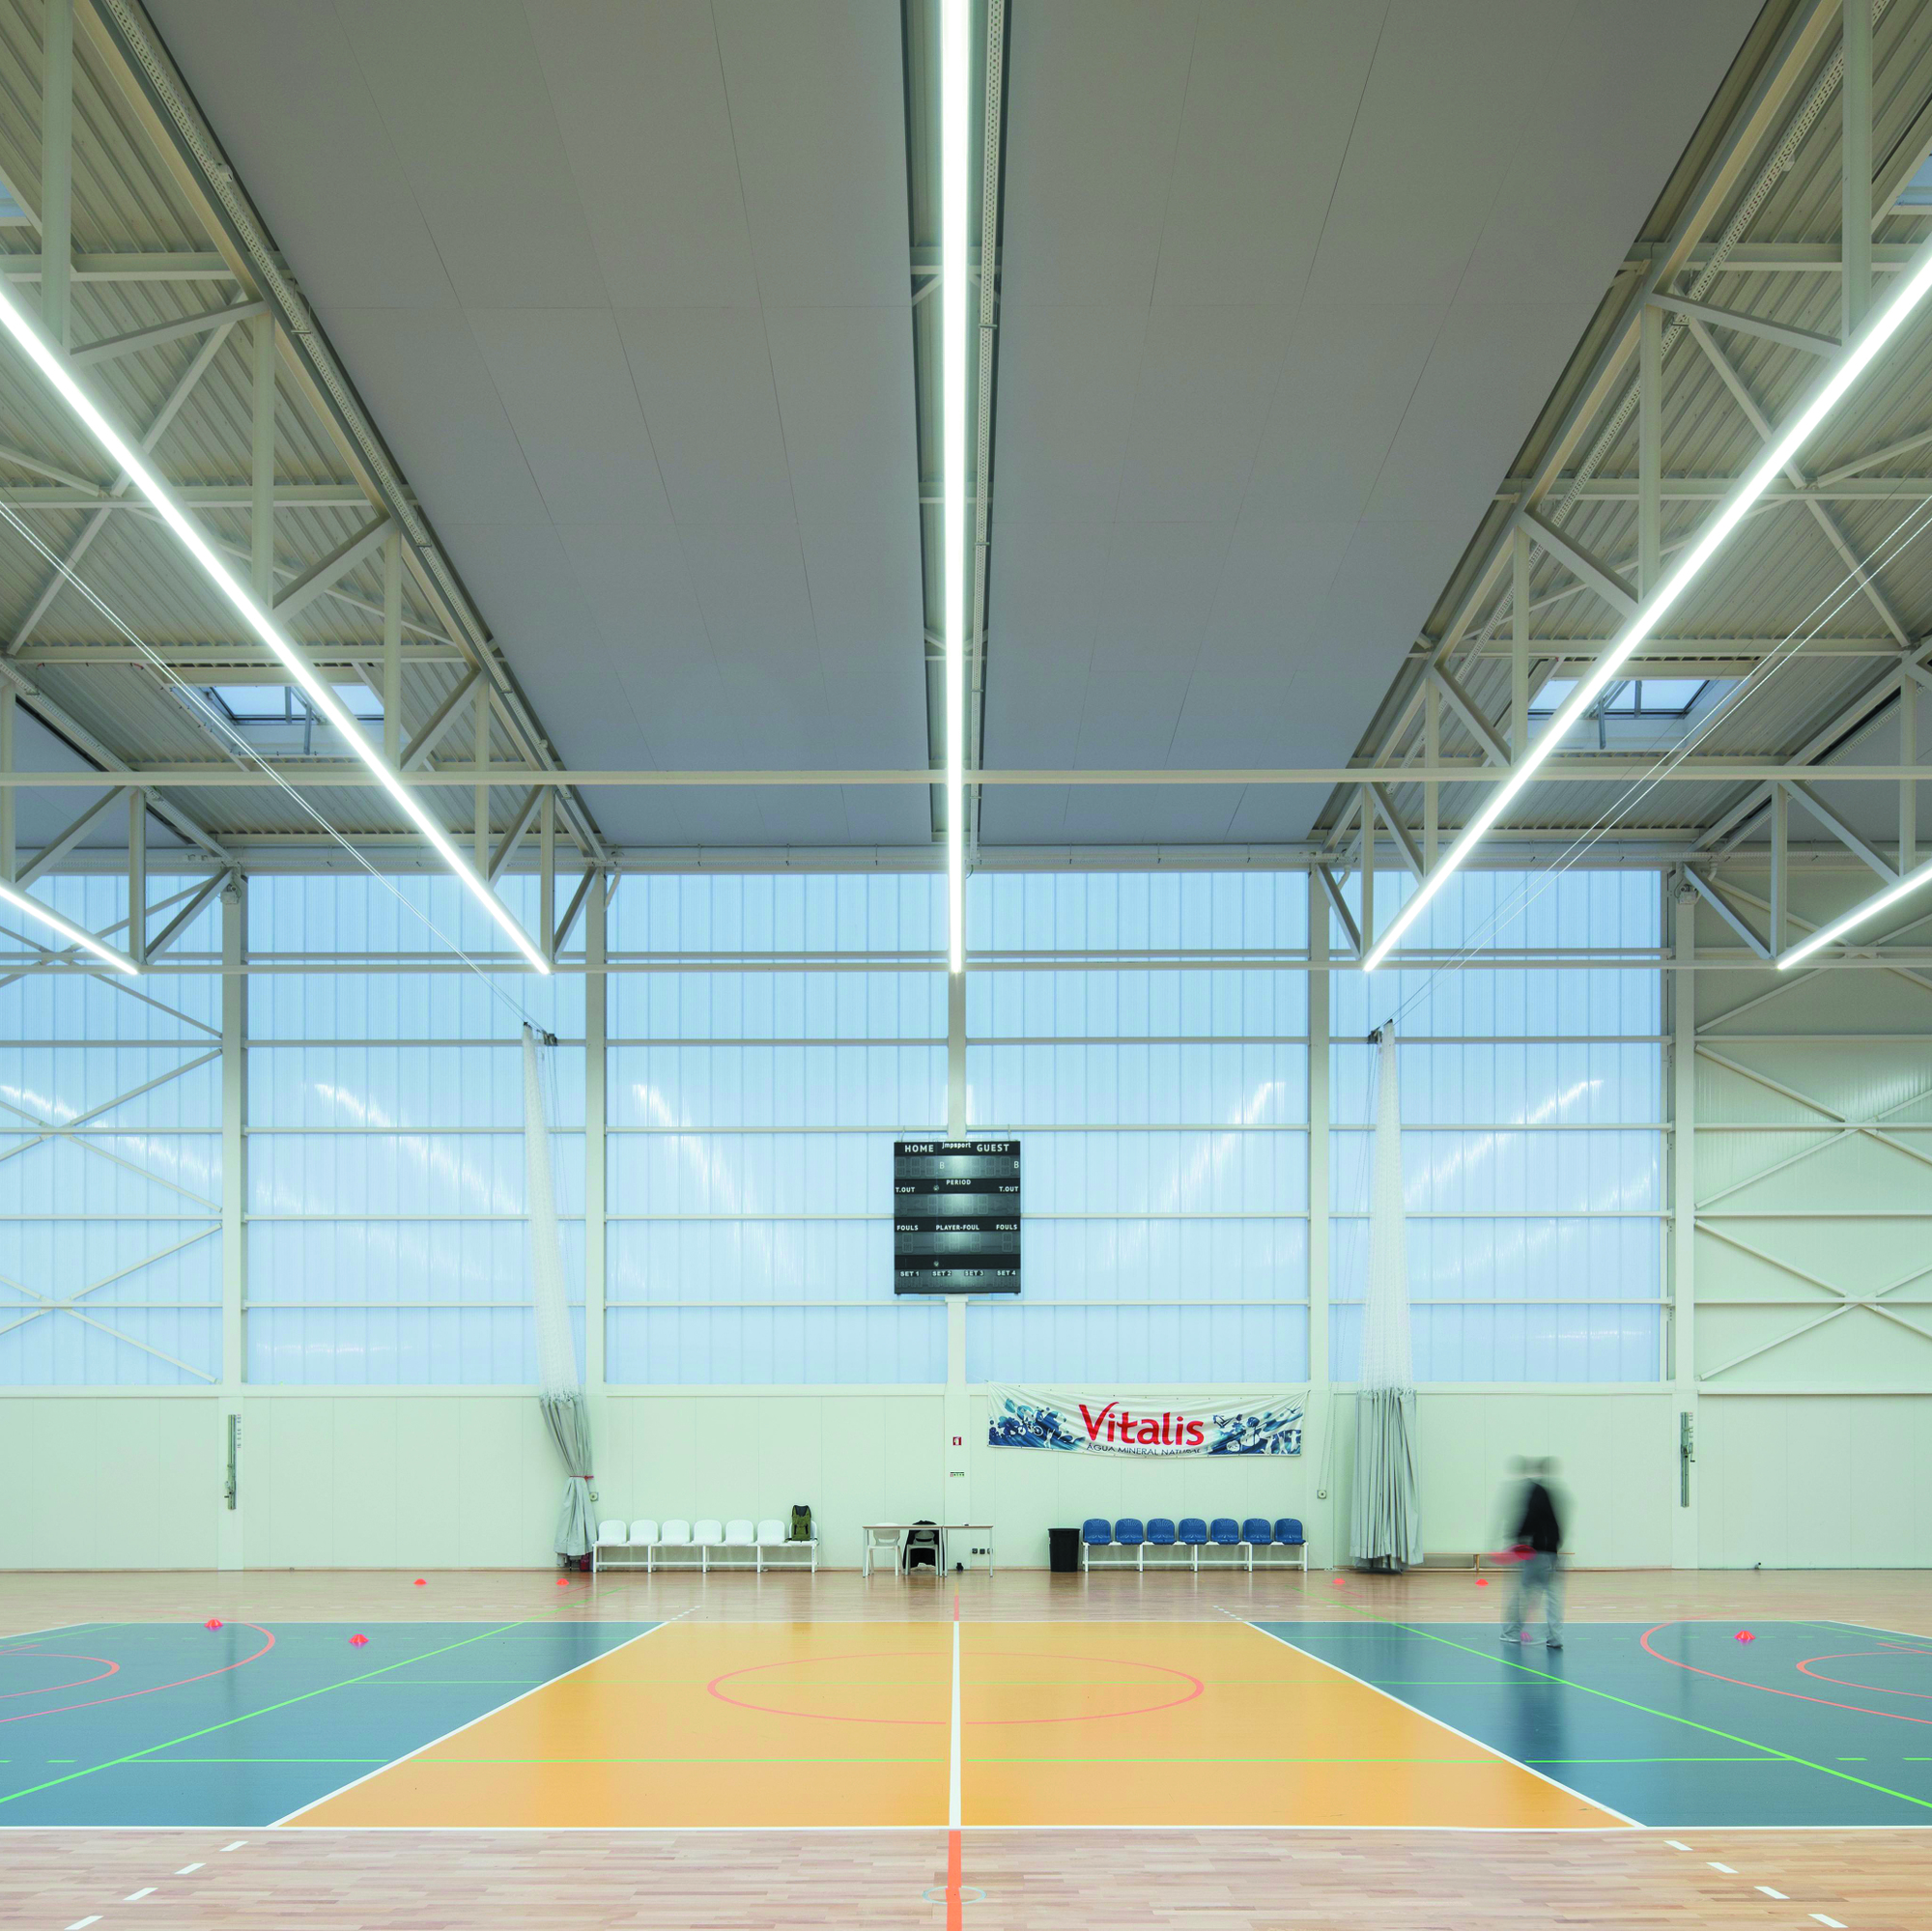 Elfanor Sports Centre, Matosinhos, Portugal - Image 2